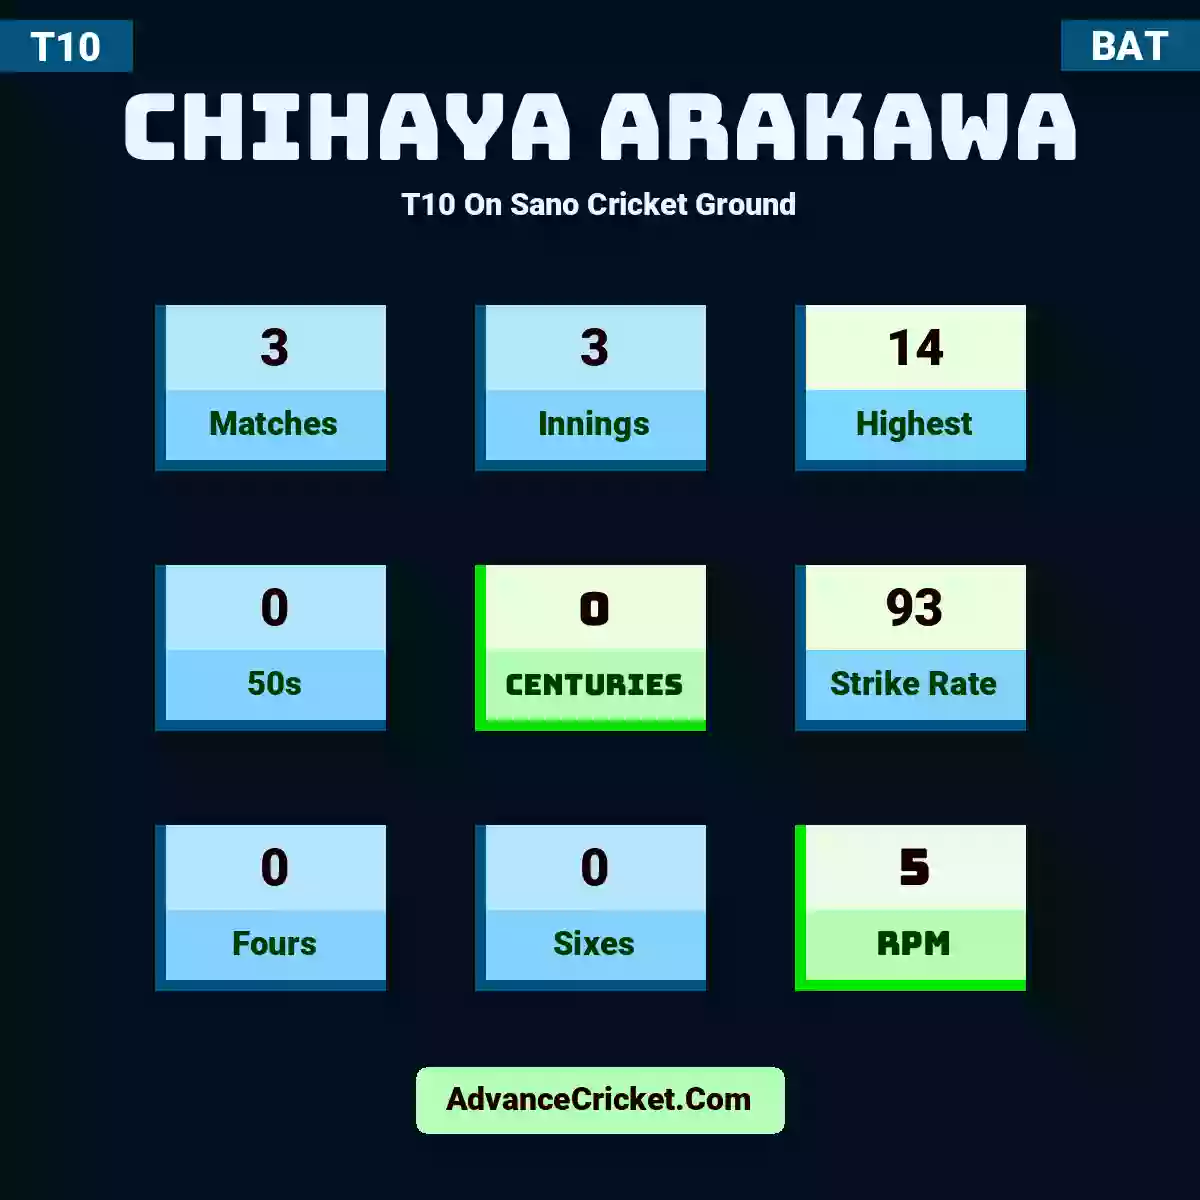 Chihaya Arakawa T10  On Sano Cricket Ground, Chihaya Arakawa played 3 matches, scored 14 runs as highest, 0 half-centuries, and 0 centuries, with a strike rate of 93. C.Arakawa hit 0 fours and 0 sixes, with an RPM of 5.